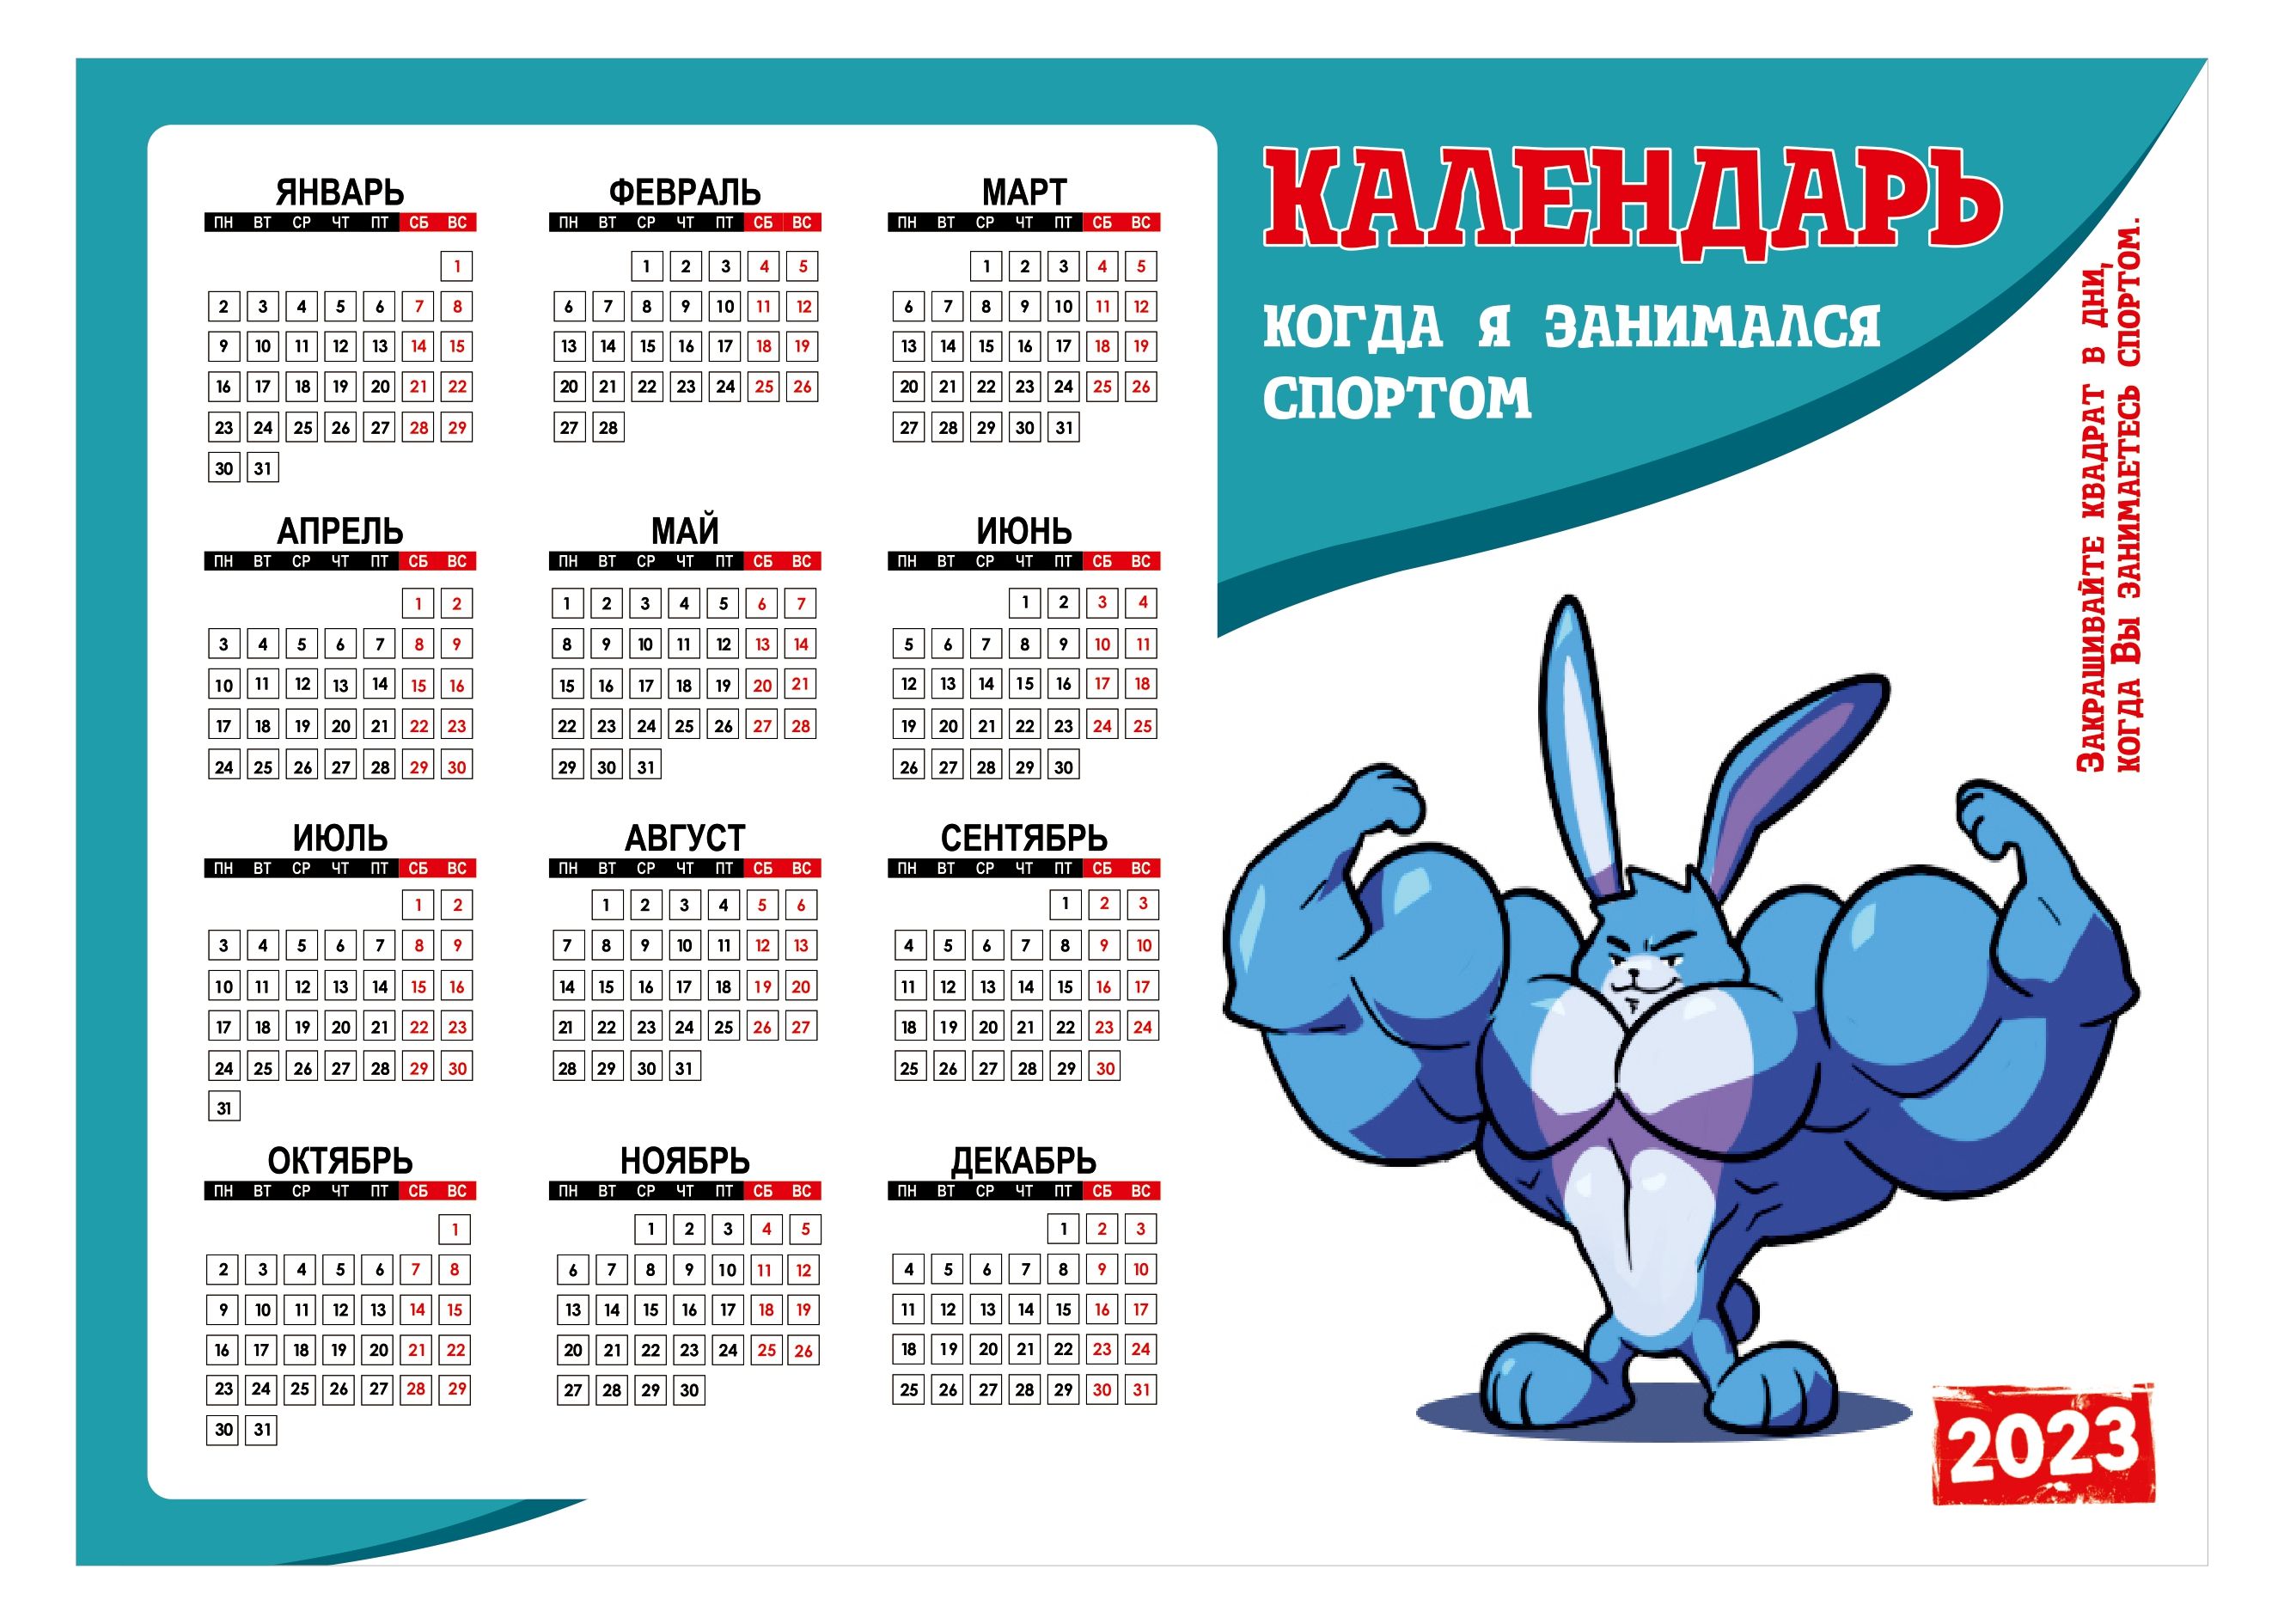 Календарь 2023 2 2. Календарь на 2023 год. Hrfktylfhm PF 2023 ujl. Спортивный календарь. Спортивный календарь на 2023.